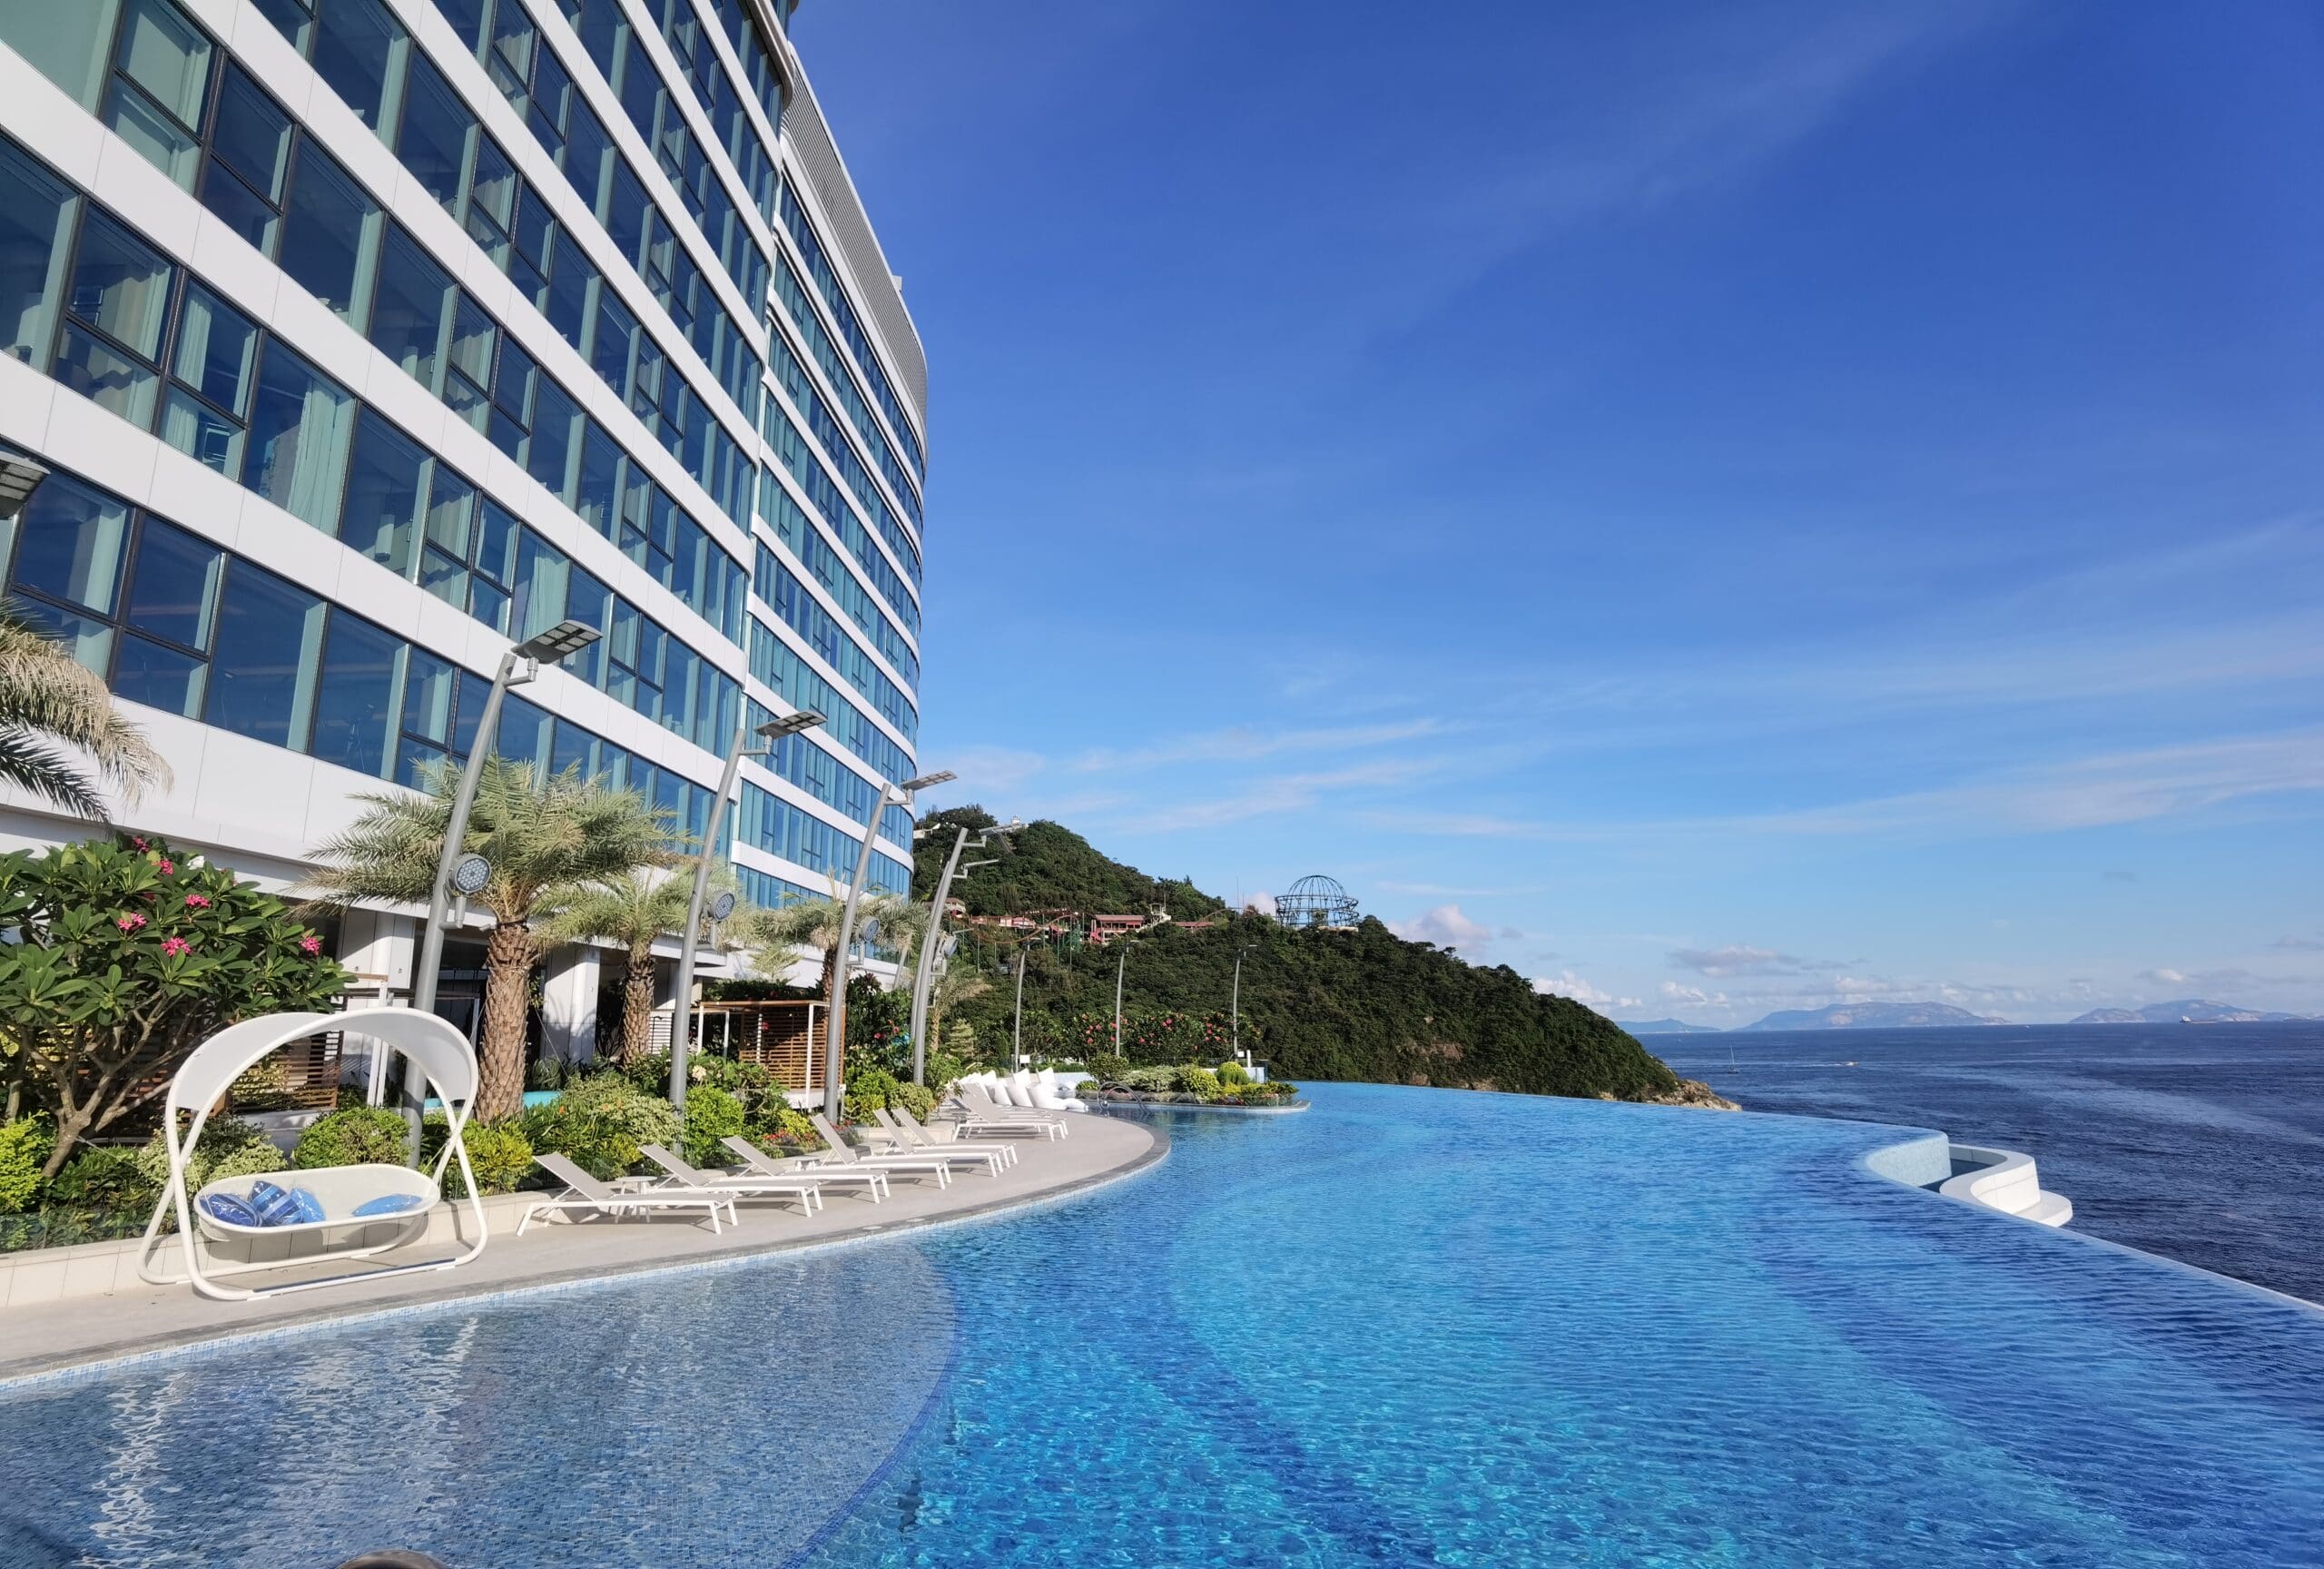 香港富麗敦海洋公園酒店 The Fullerton Ocean Park Hotel Hong Kong pool